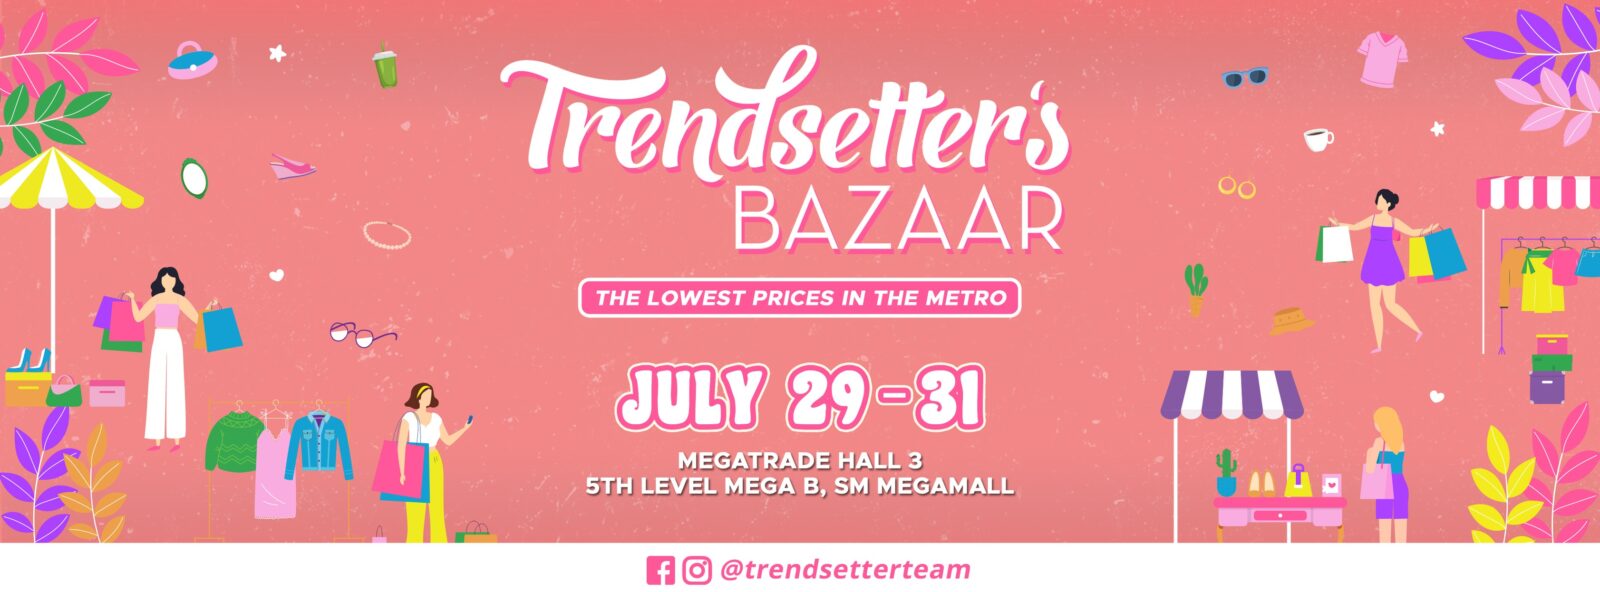 Trendsetter's Bazaar